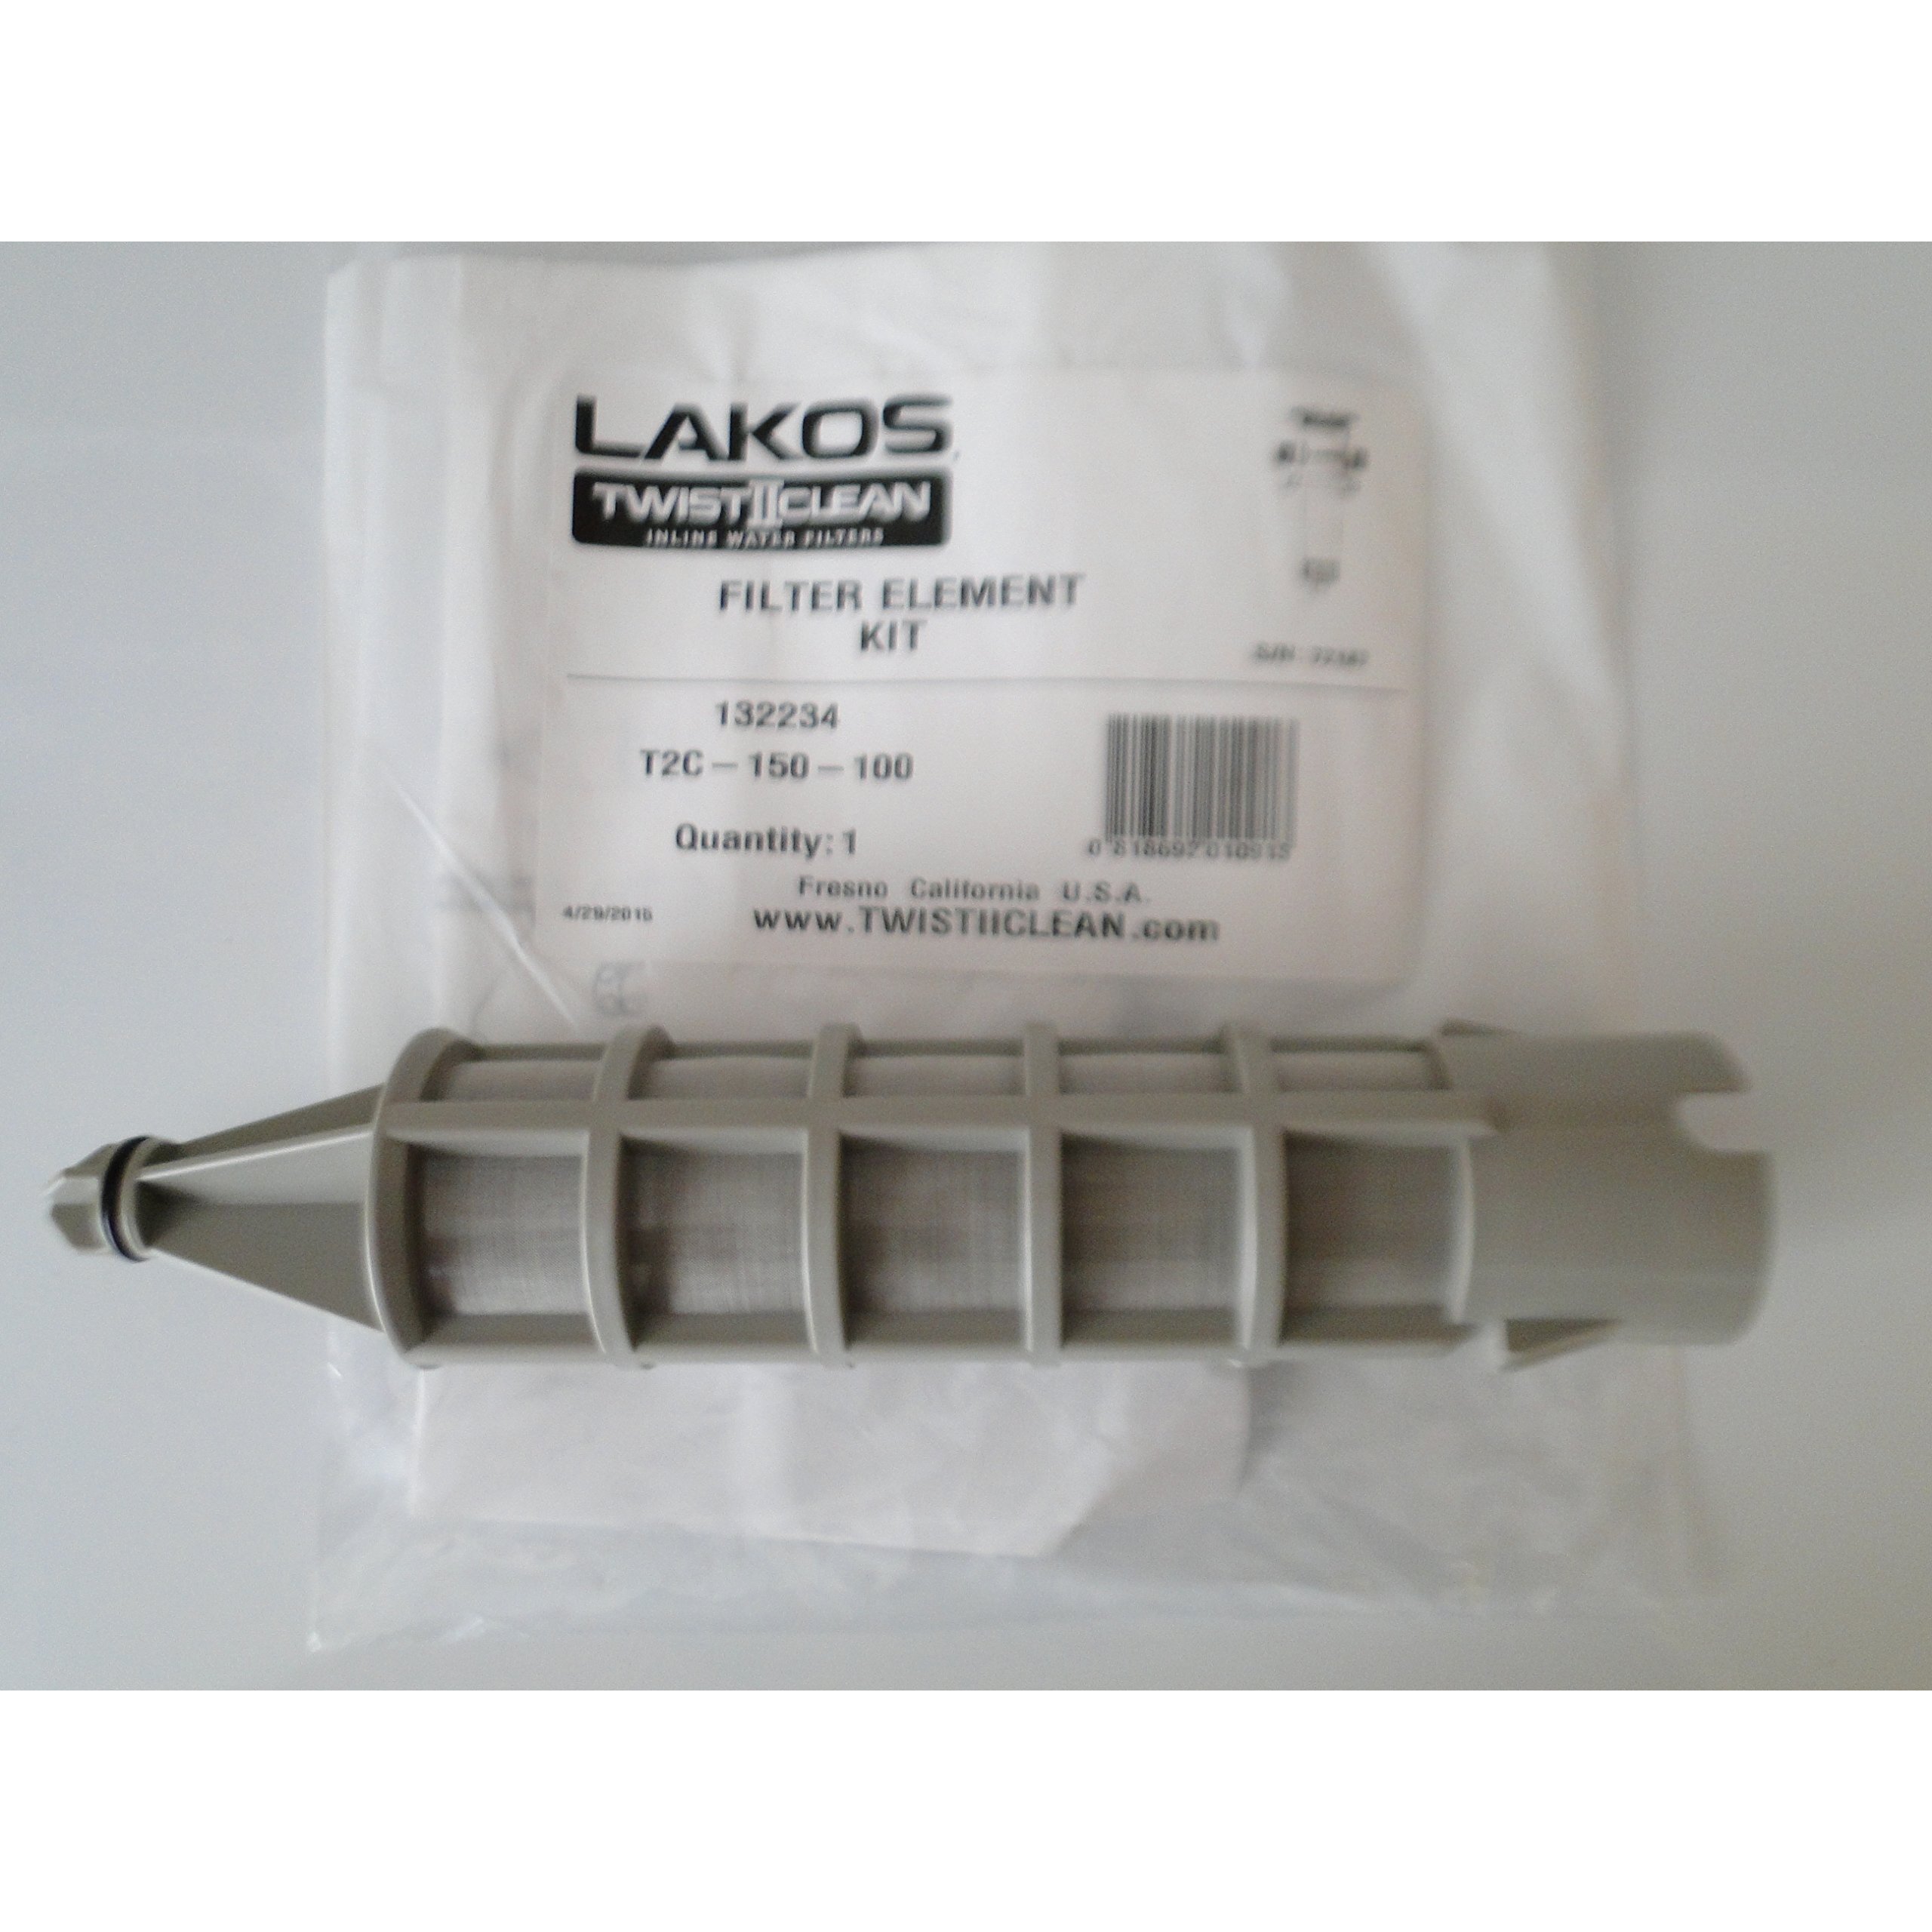 Lakos Filter Element Replacement Kit 1.5 Twist 2 Clean Twist Ii Clean Twistiiclean (100 Mesh Gray T2C-150-100 (132234))